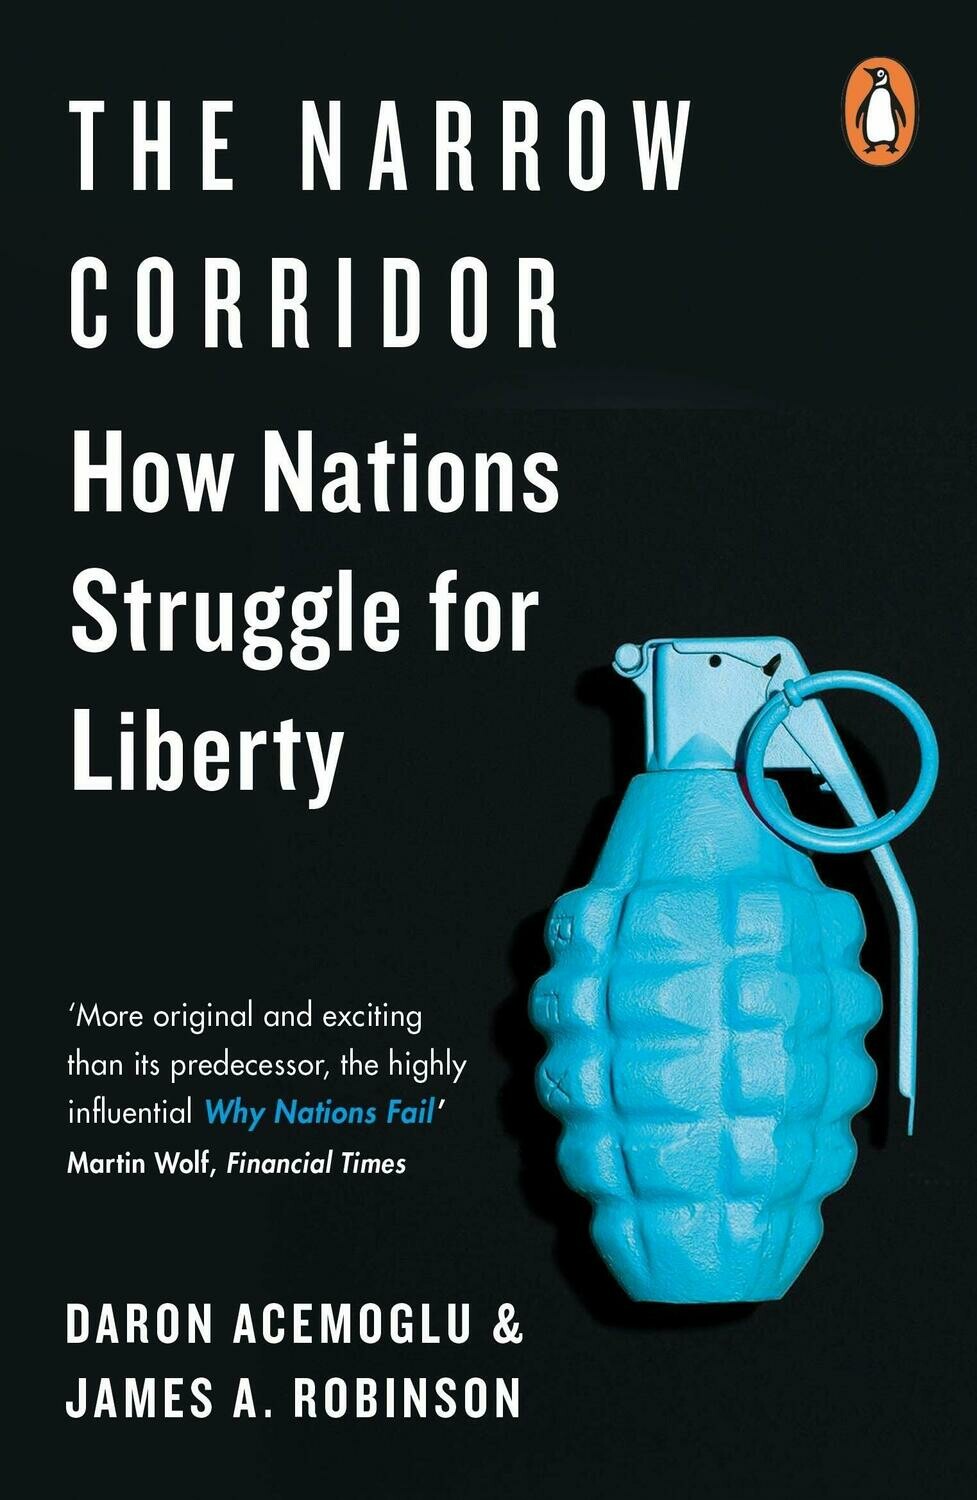 The Narrow Corridor: How Nations Struggle for Liberty - Daron Acemoglu and James A. Robinson